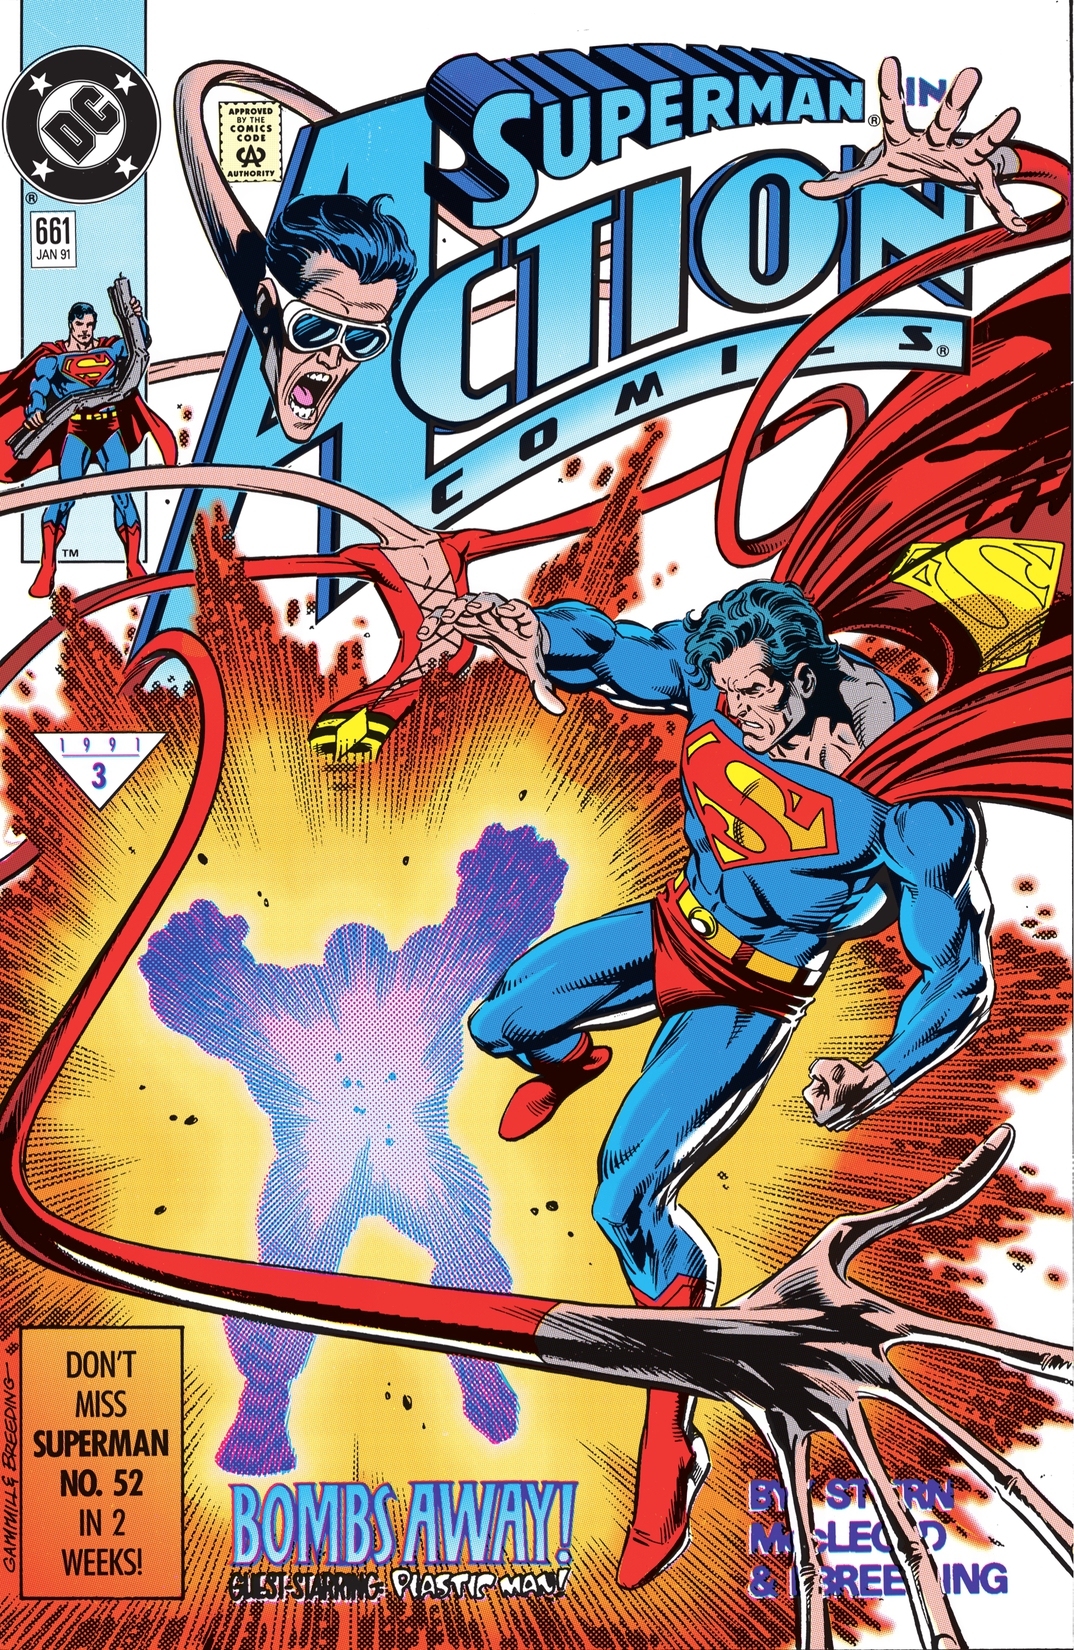 Action Comics (1938-2011) #661 preview images